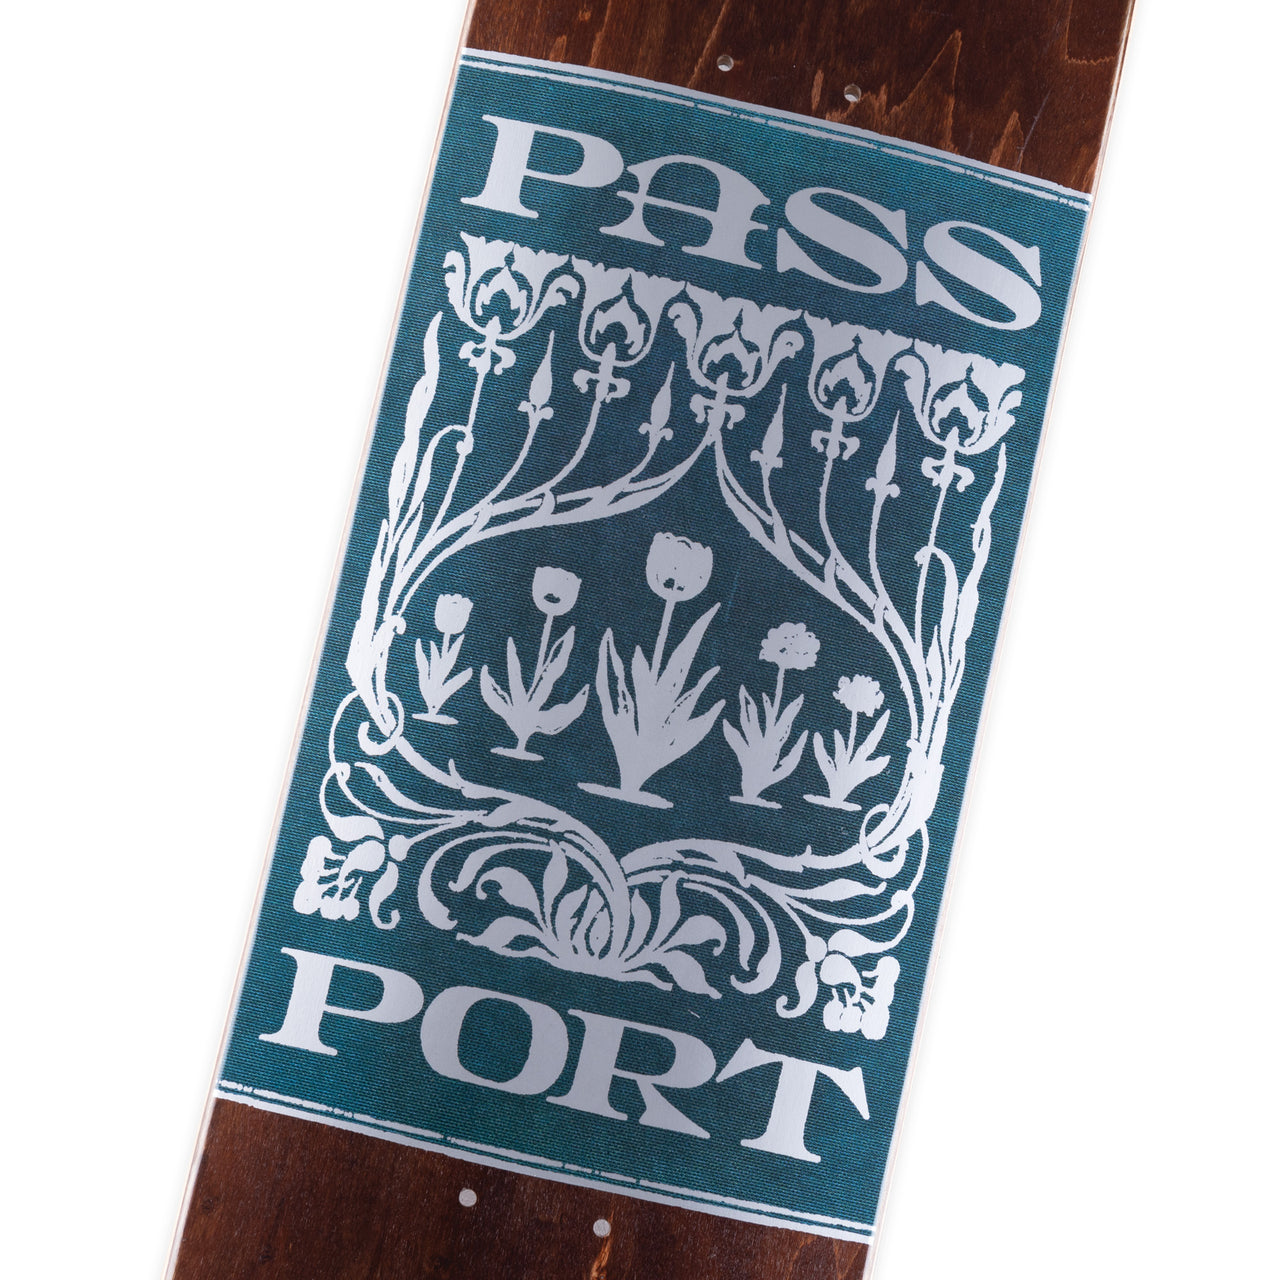 PASS~PORT - "EMBOSSED SERIES" TULIPS SKATEBOARD DECK - 8.38